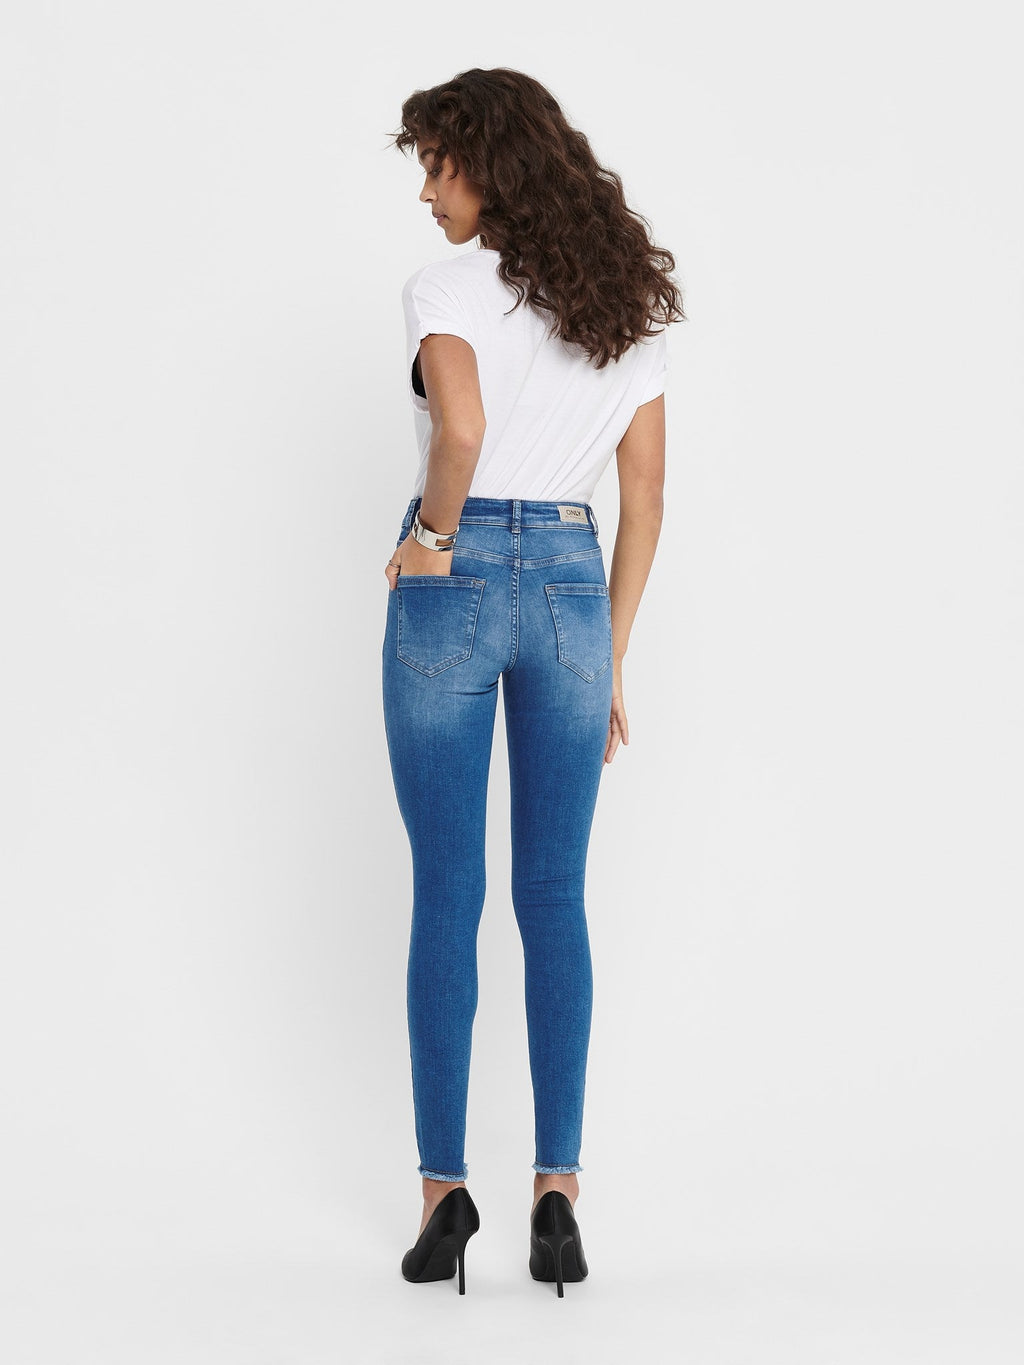 Blush Midsk Jeans - Μεσαίο μπλε